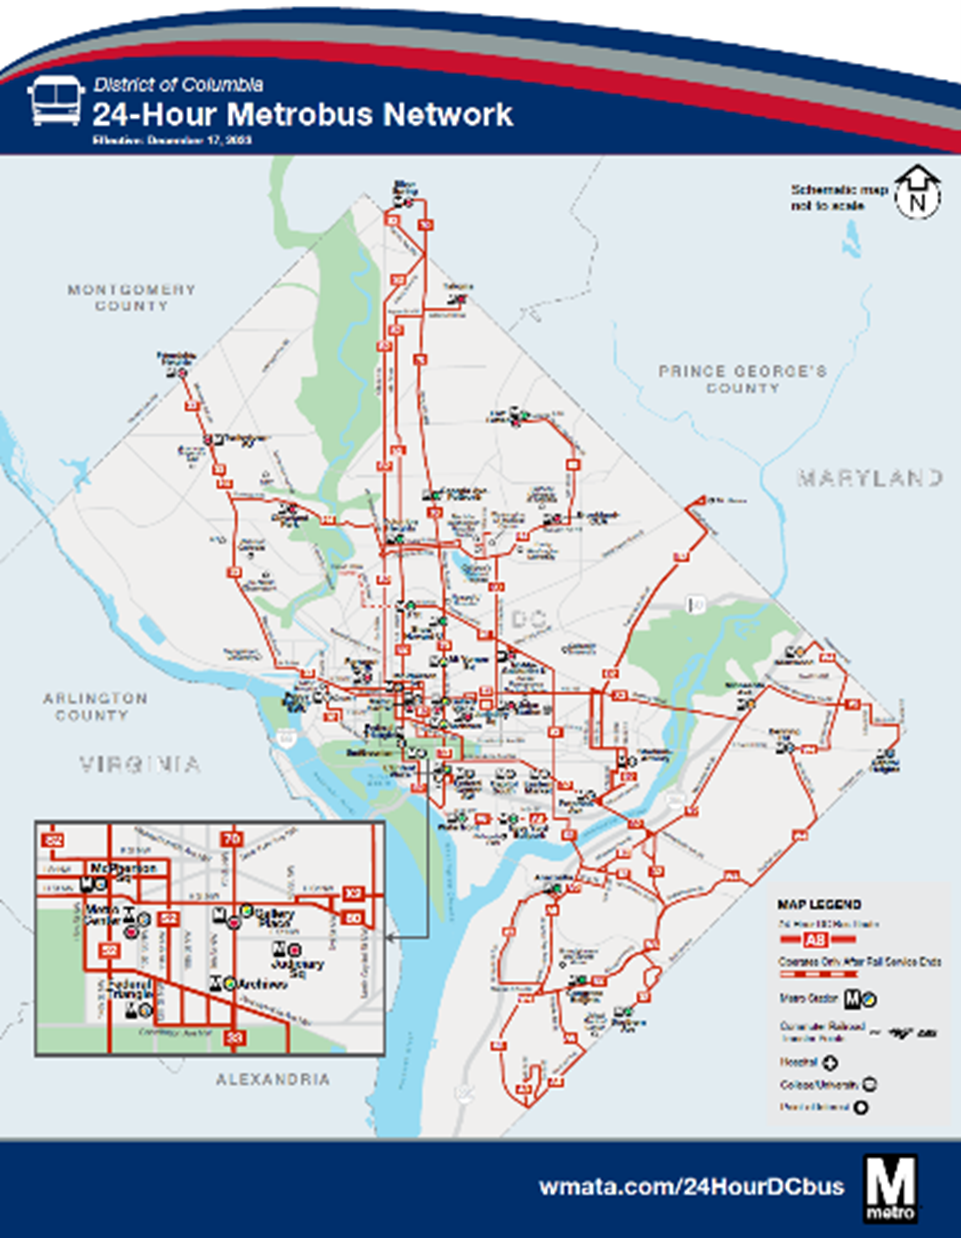 24-Hour Metrobus Network